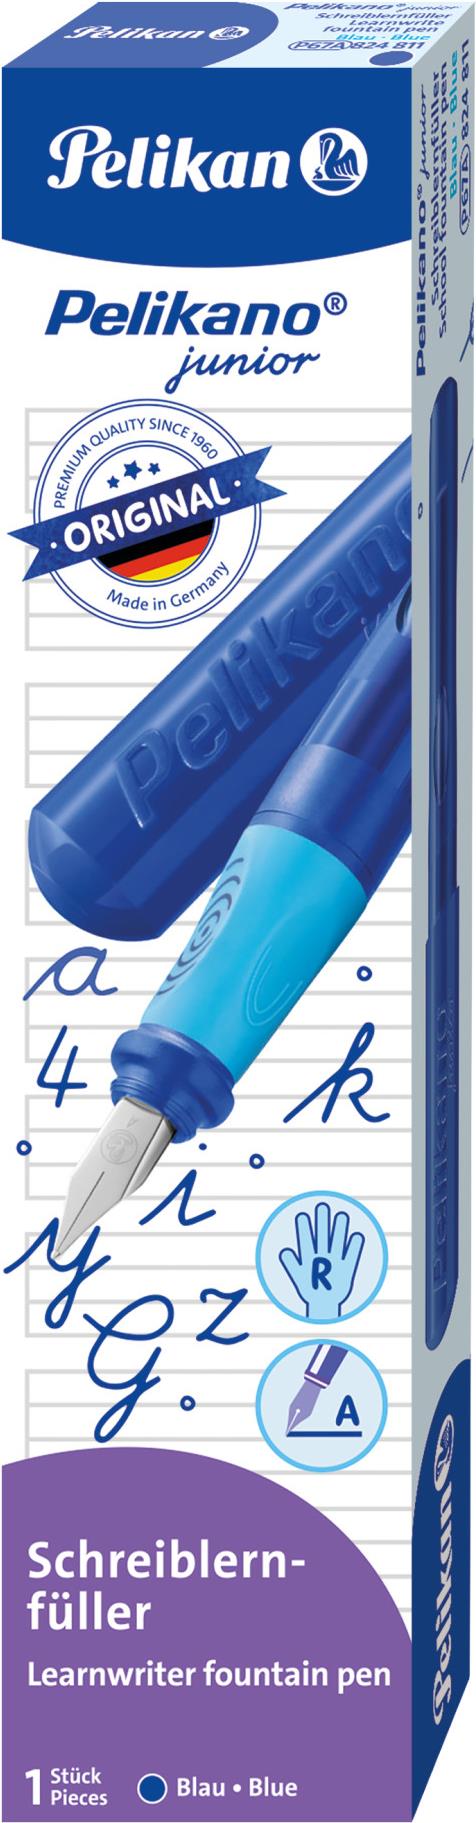 PELIKAN Pelikano® Junior Patronenfüller blau/hellblau A (für Anfänger)